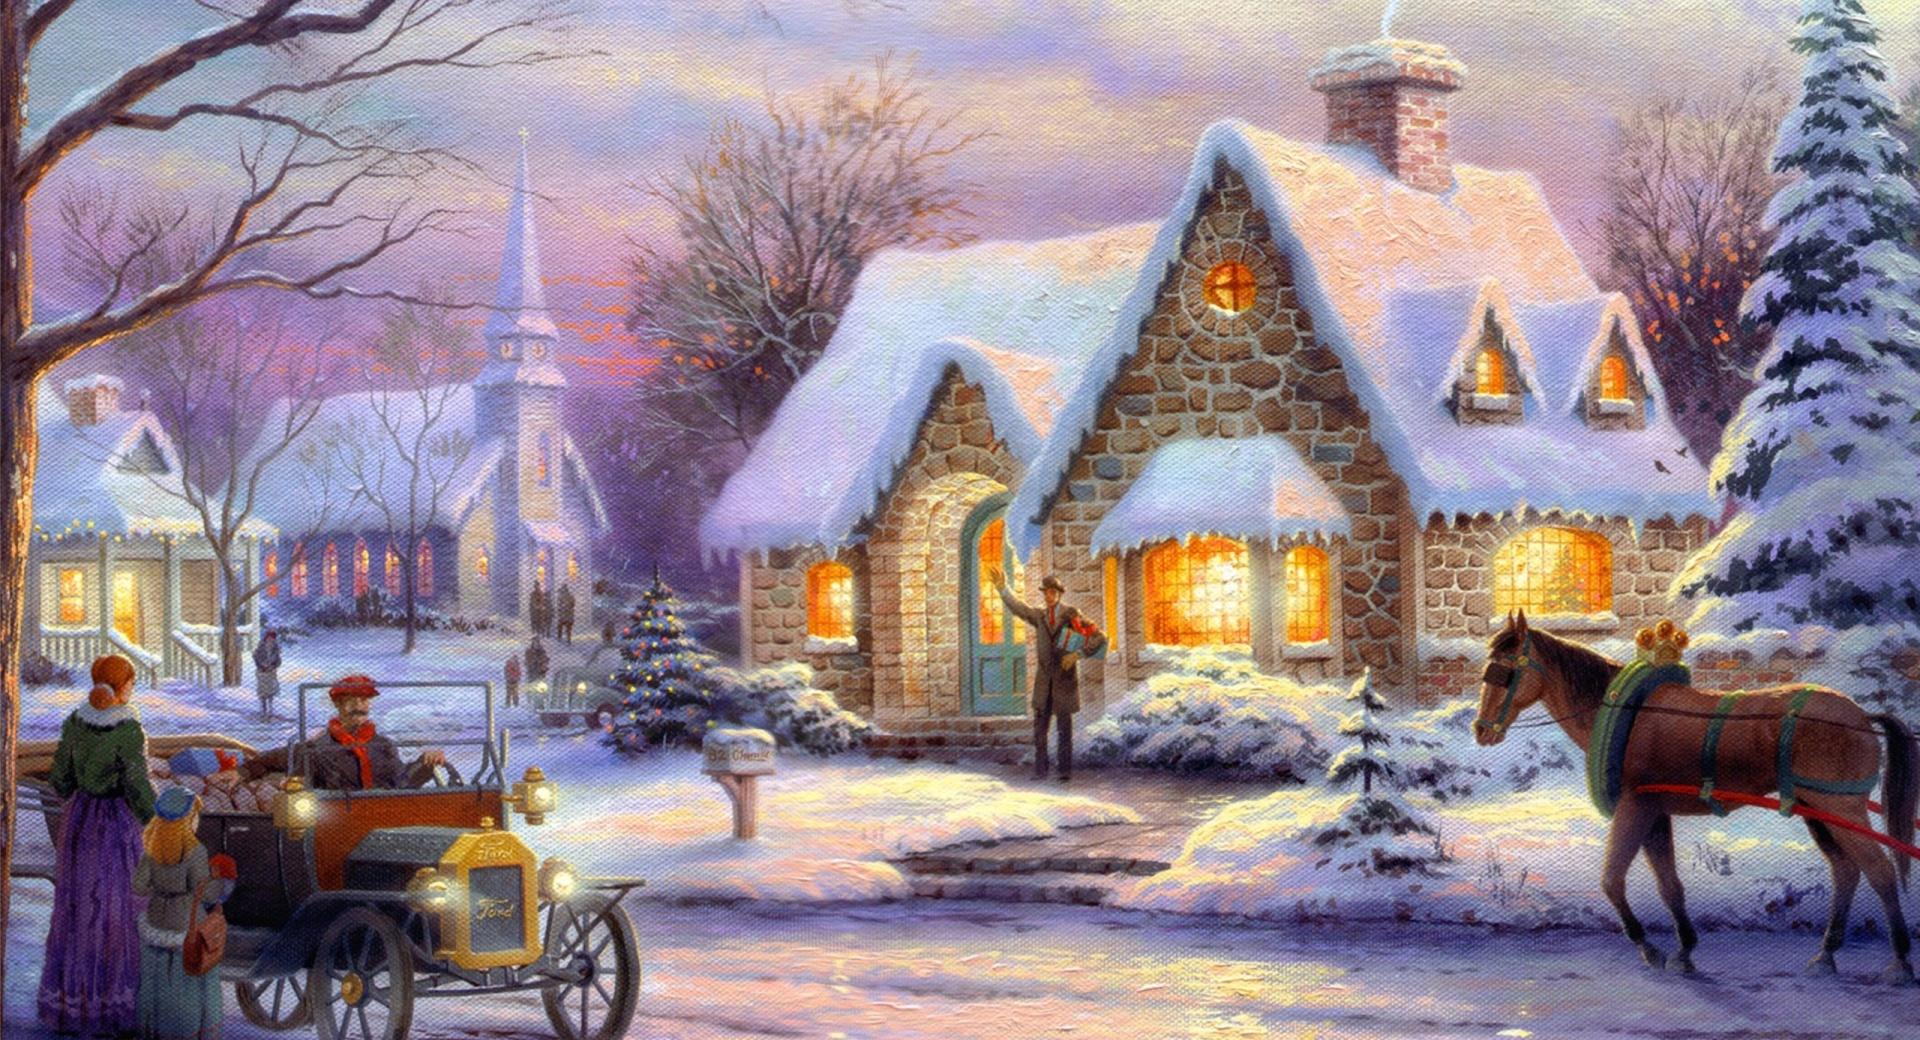 Memories Of Christmas by Thomas Kinkade wallpapers HD quality